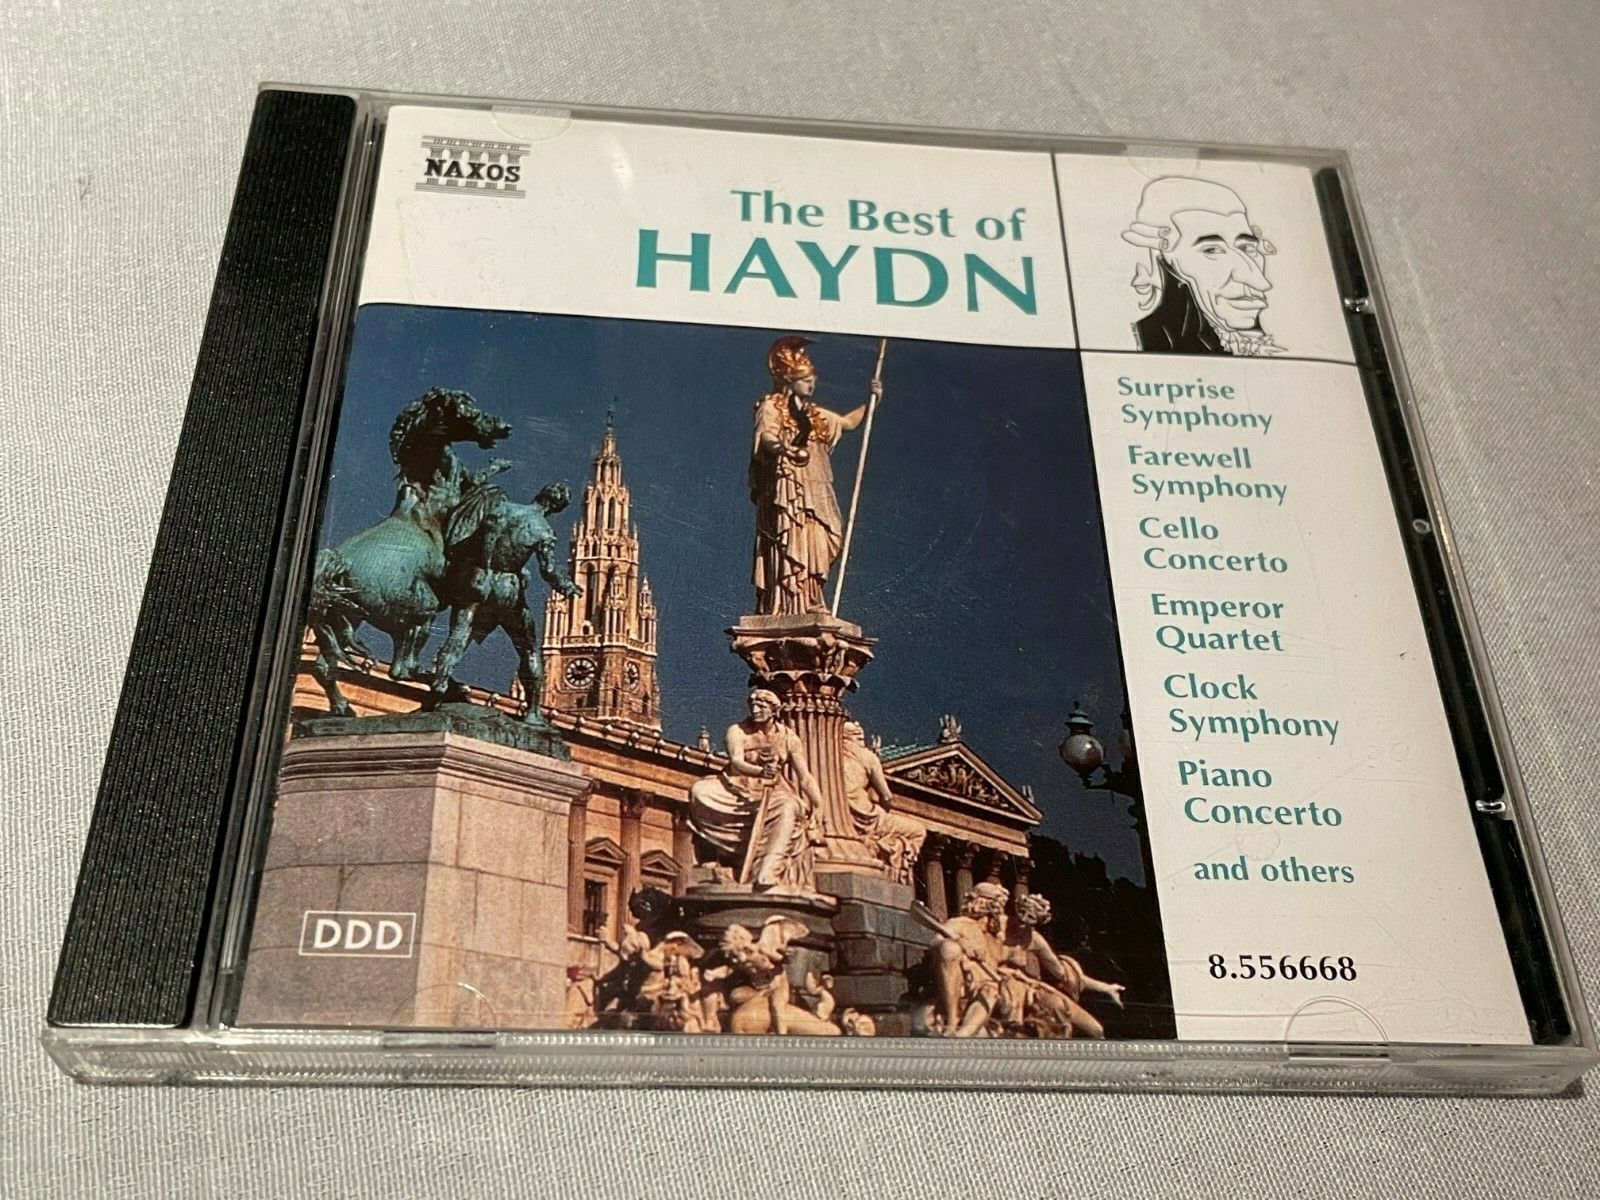 The Best of Haydn - CD Album - 1997 HNH International - 11 Great Tracks